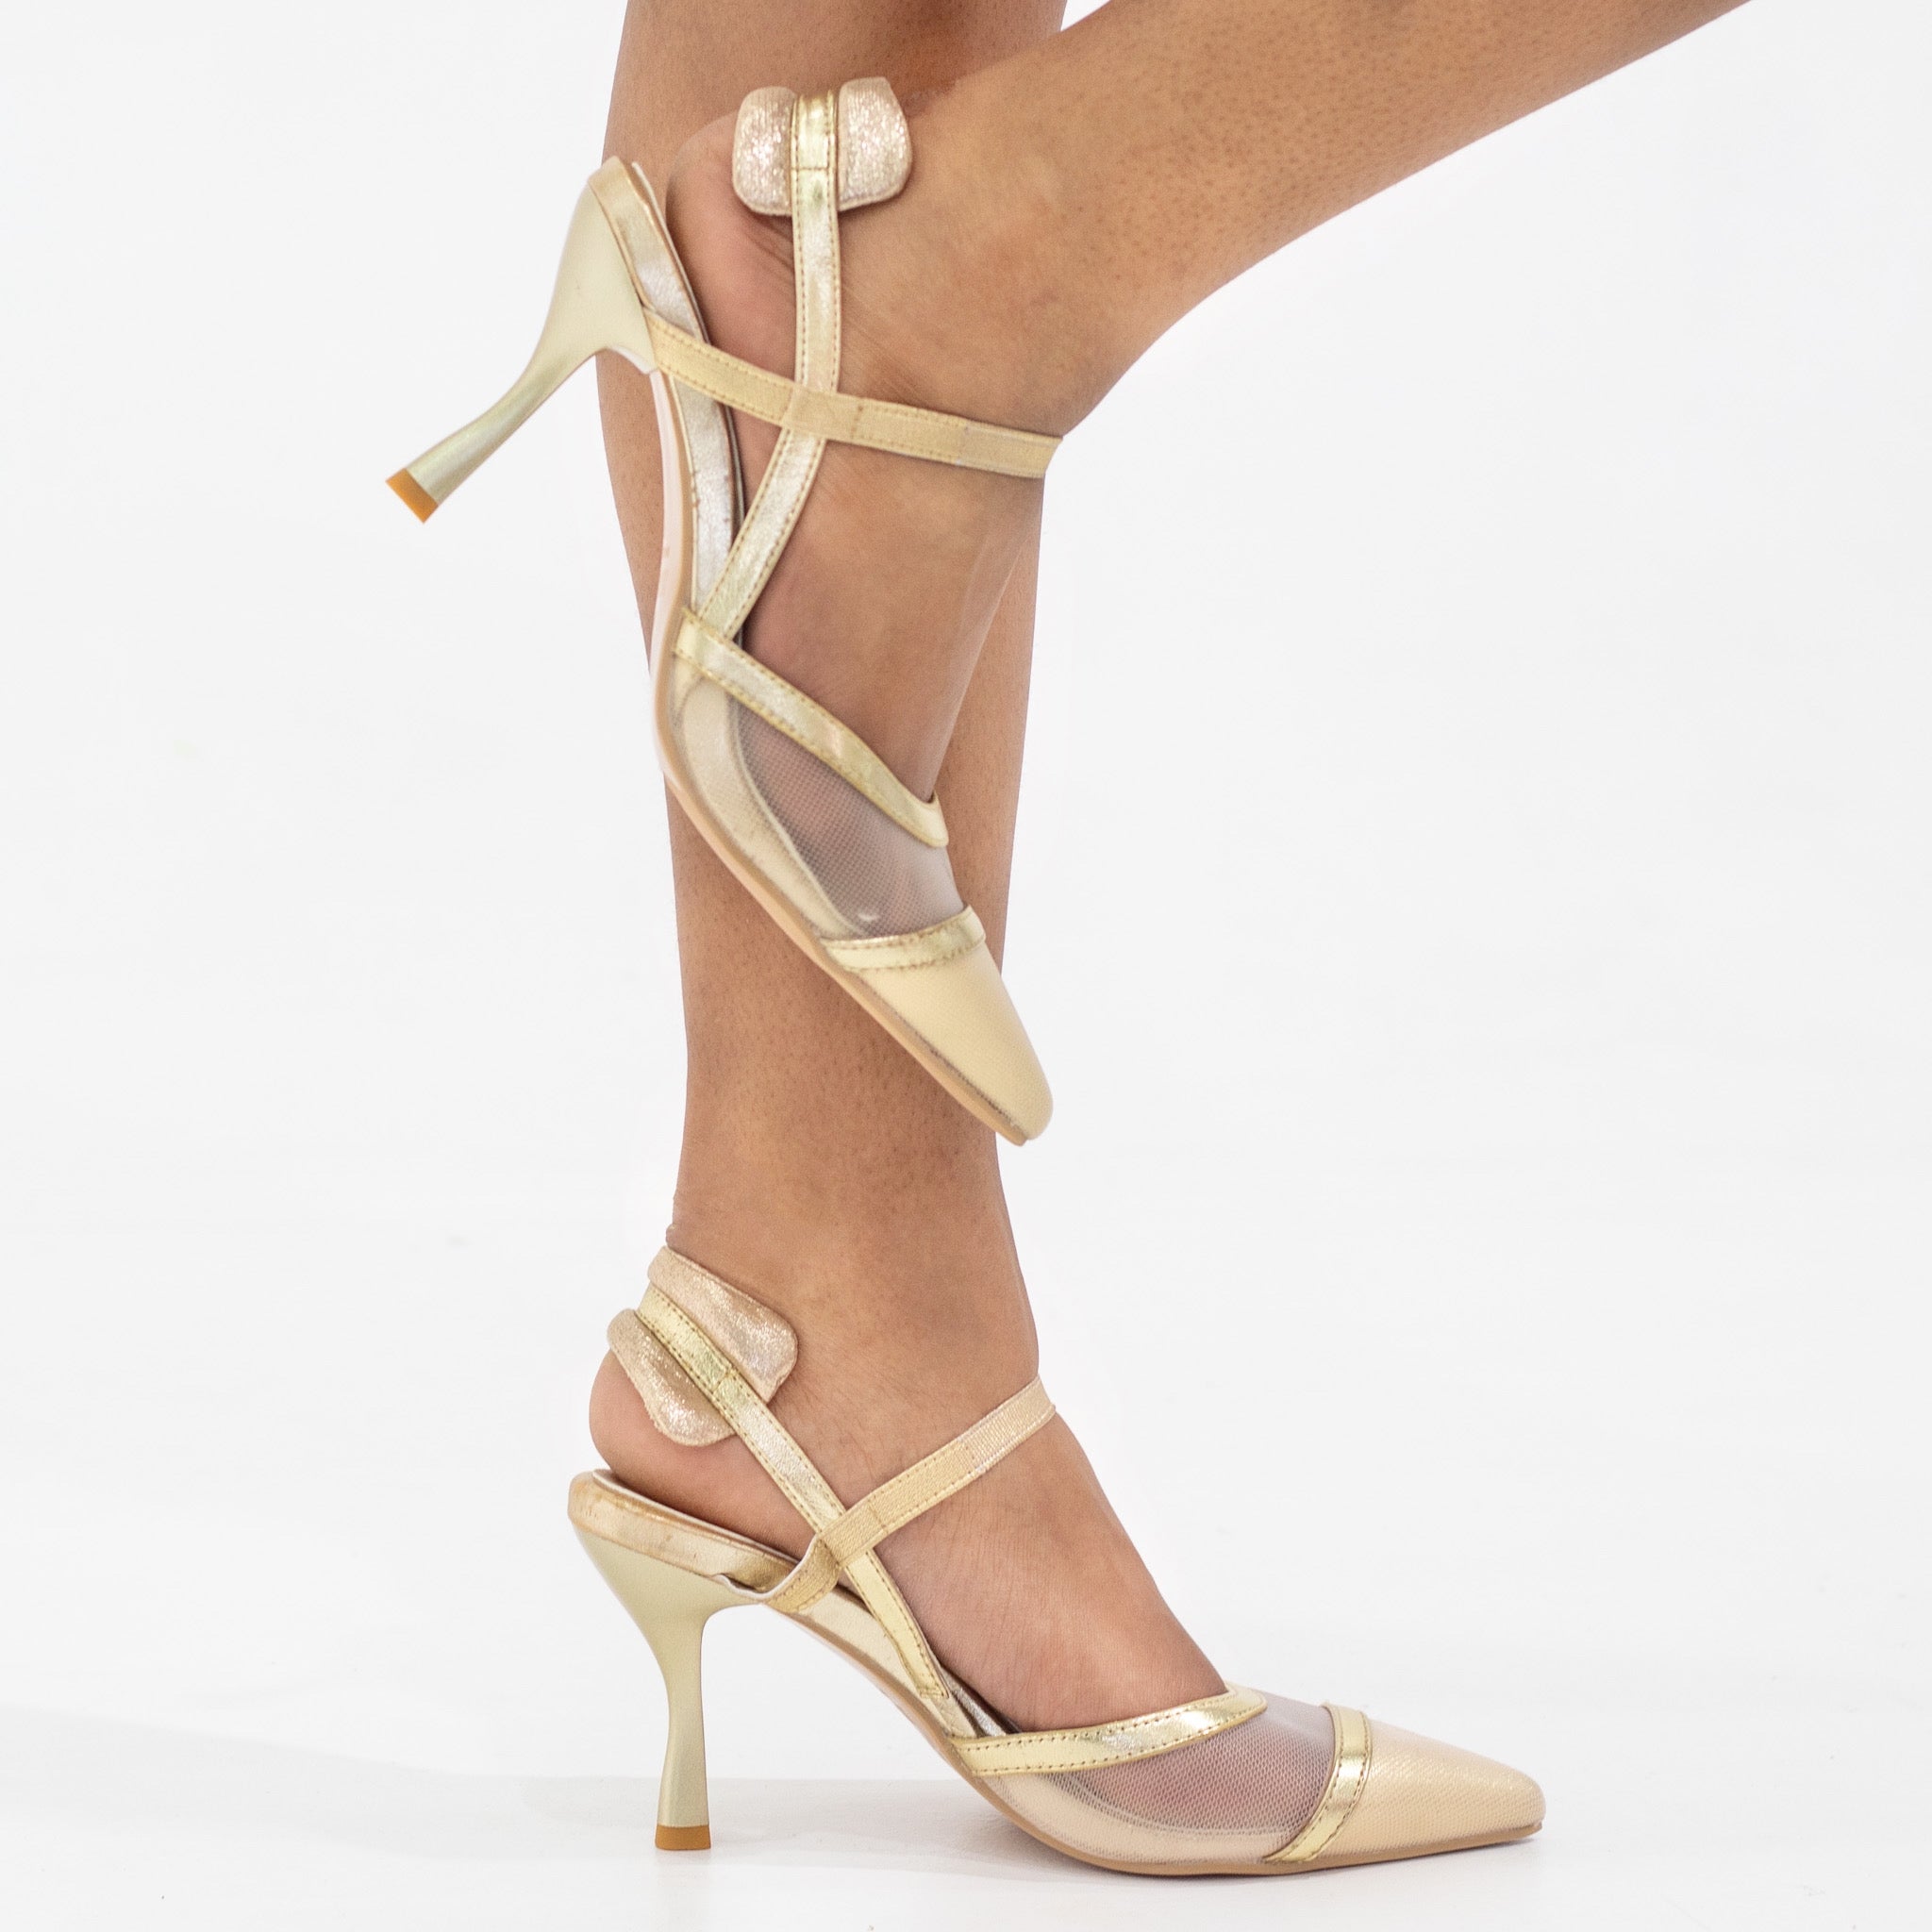 Hazar closed mesh 5cm heel sling back gold